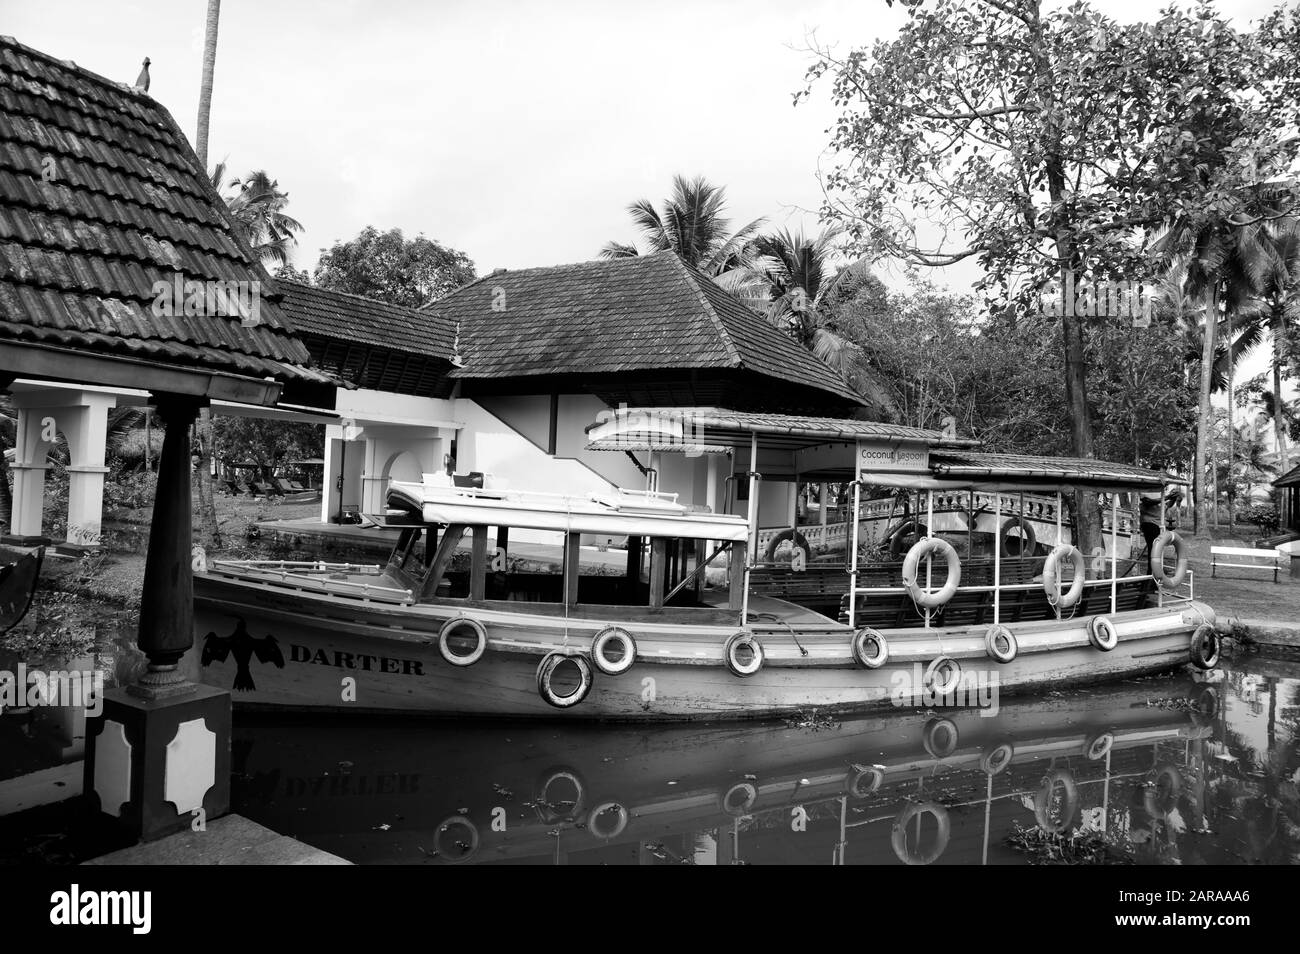 Bateau Darter, Coconut Lagoon Resort, Kumarakom, Kottayam, Kerala, Inde, Asie Banque D'Images